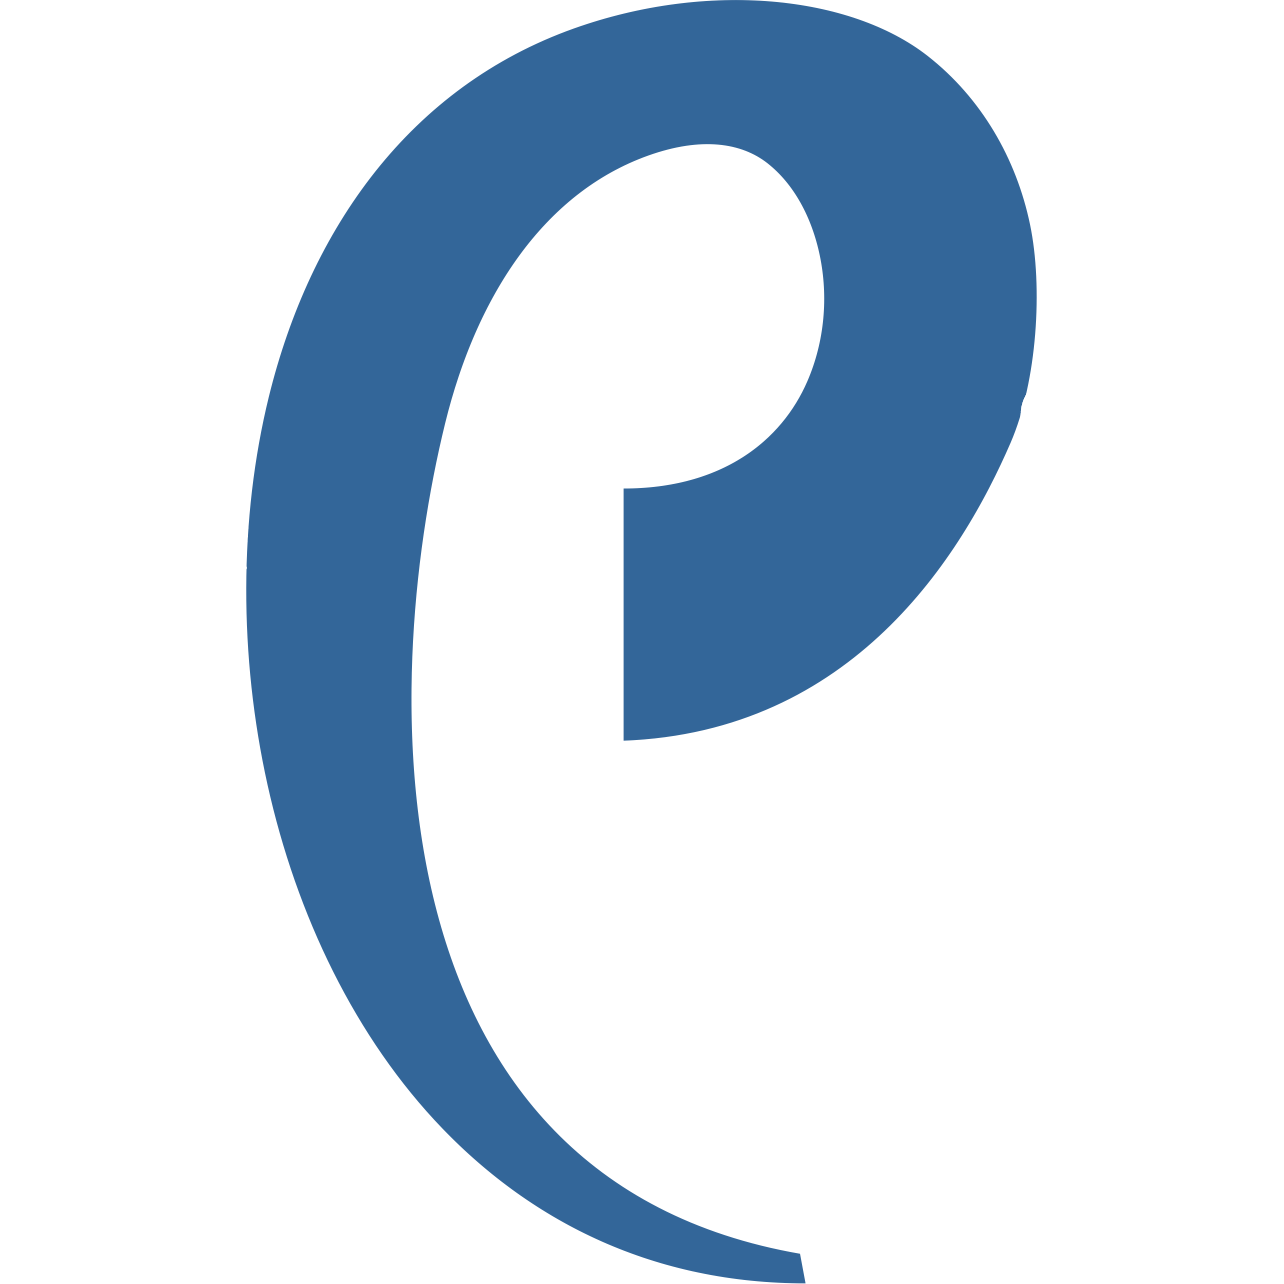 PaymentEvolution logo